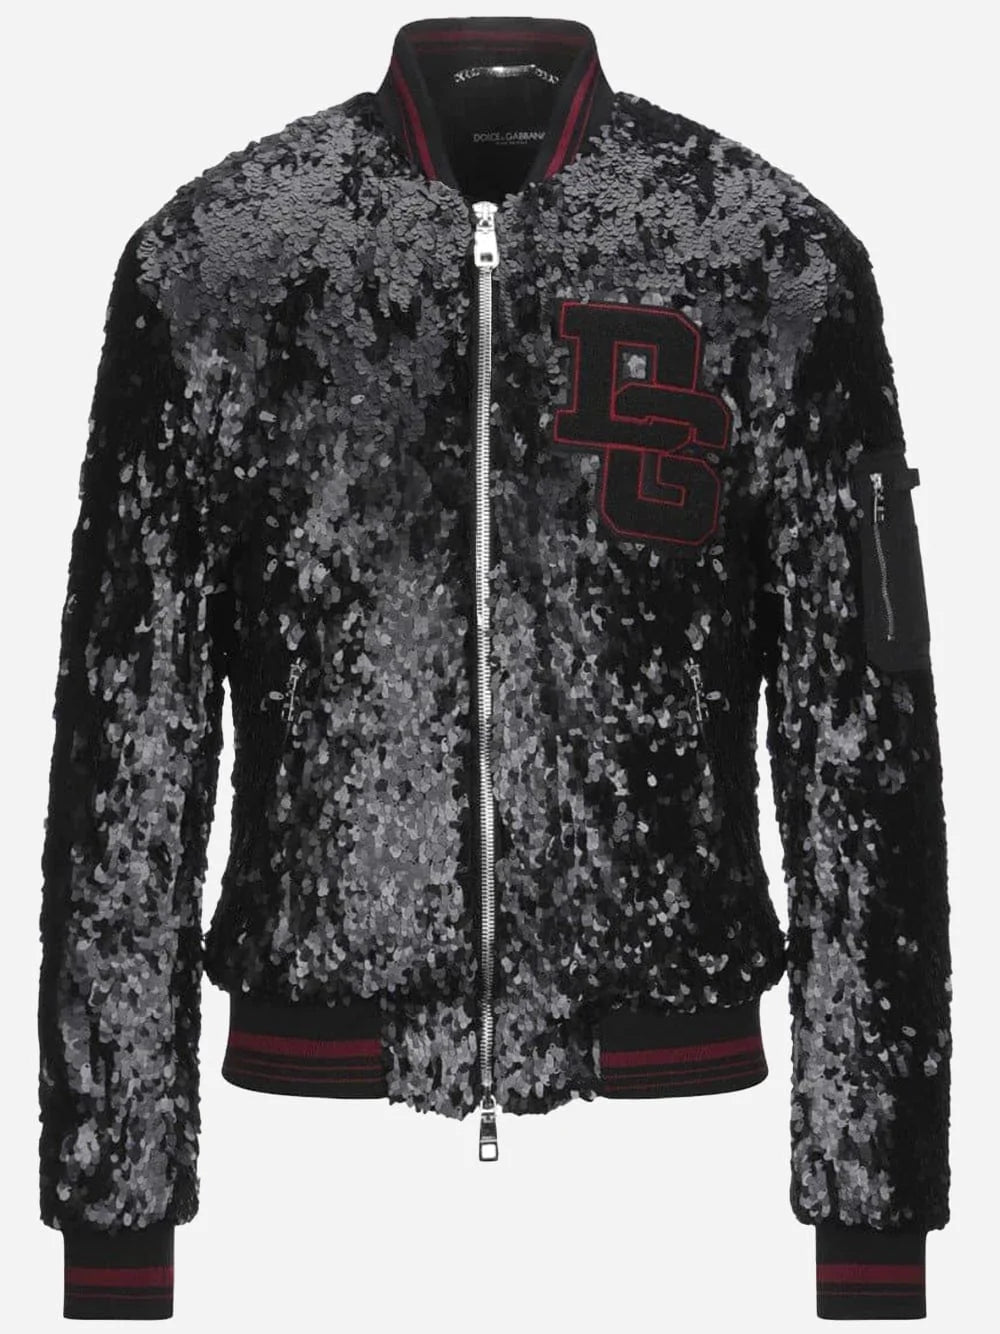 Dolce & Gabbana Sequined Bomber Jacket